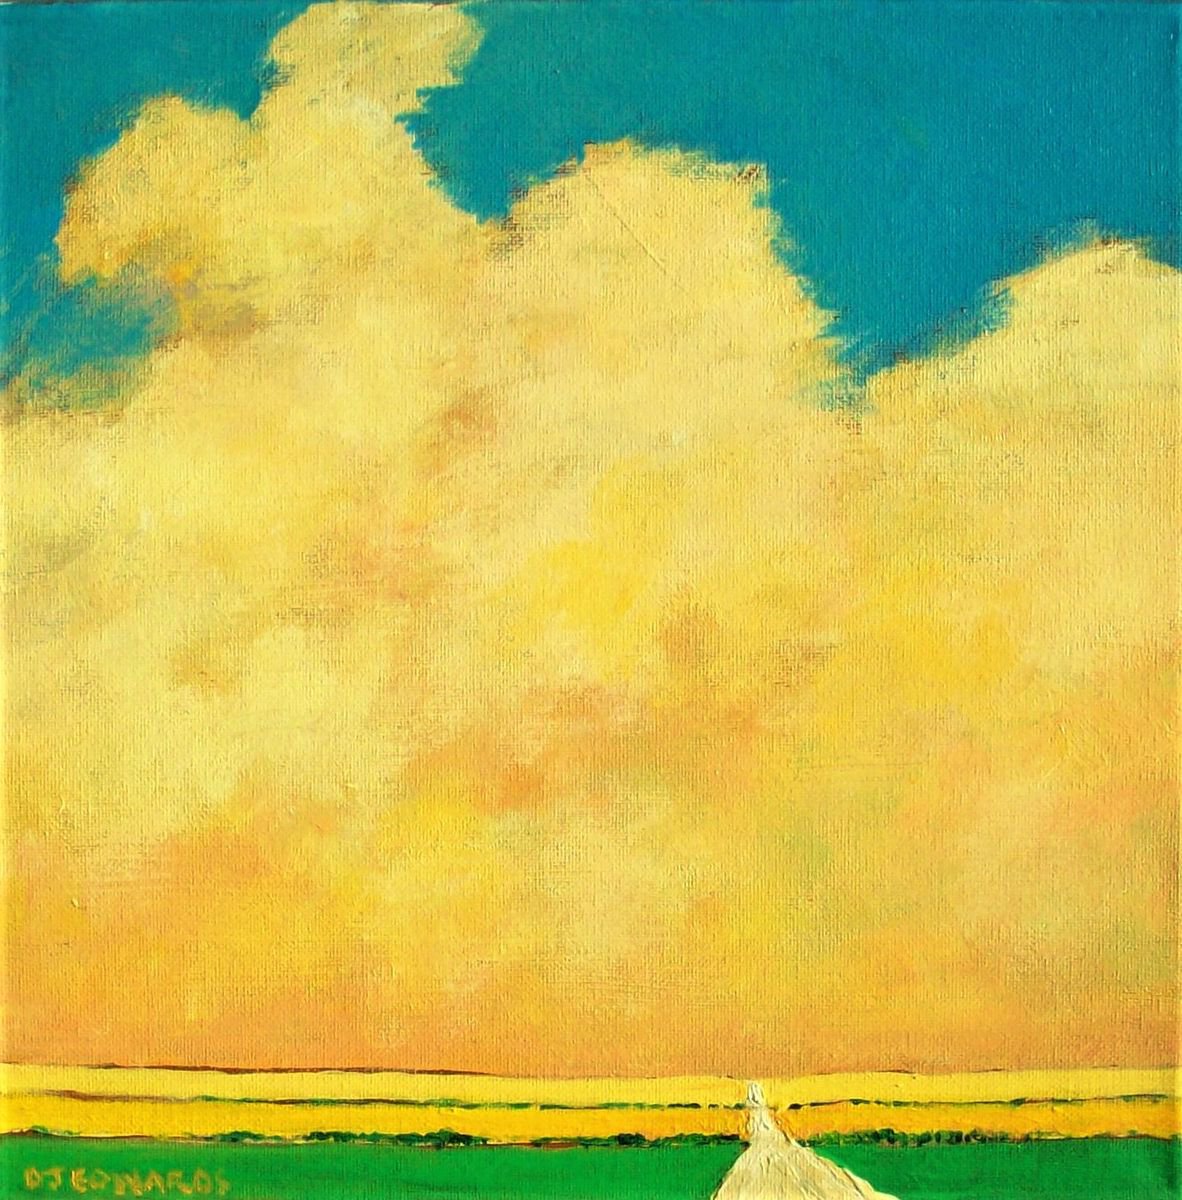 Evening Clouds, Prairie Road by David J Edwards